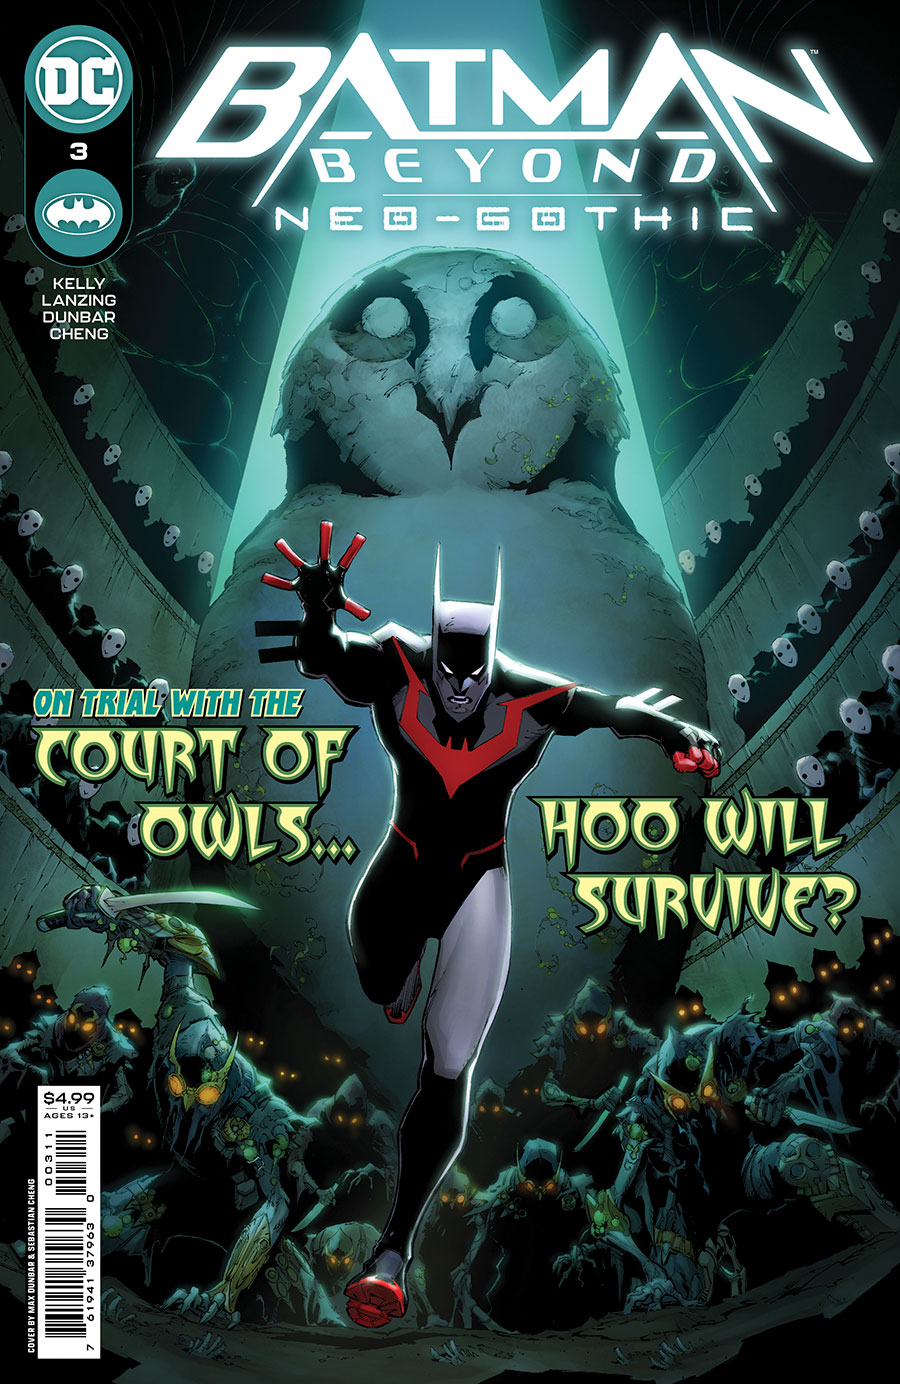 Batman Beyond Neo-Gothic #3 Cover A Regular Max Dunbar Cover